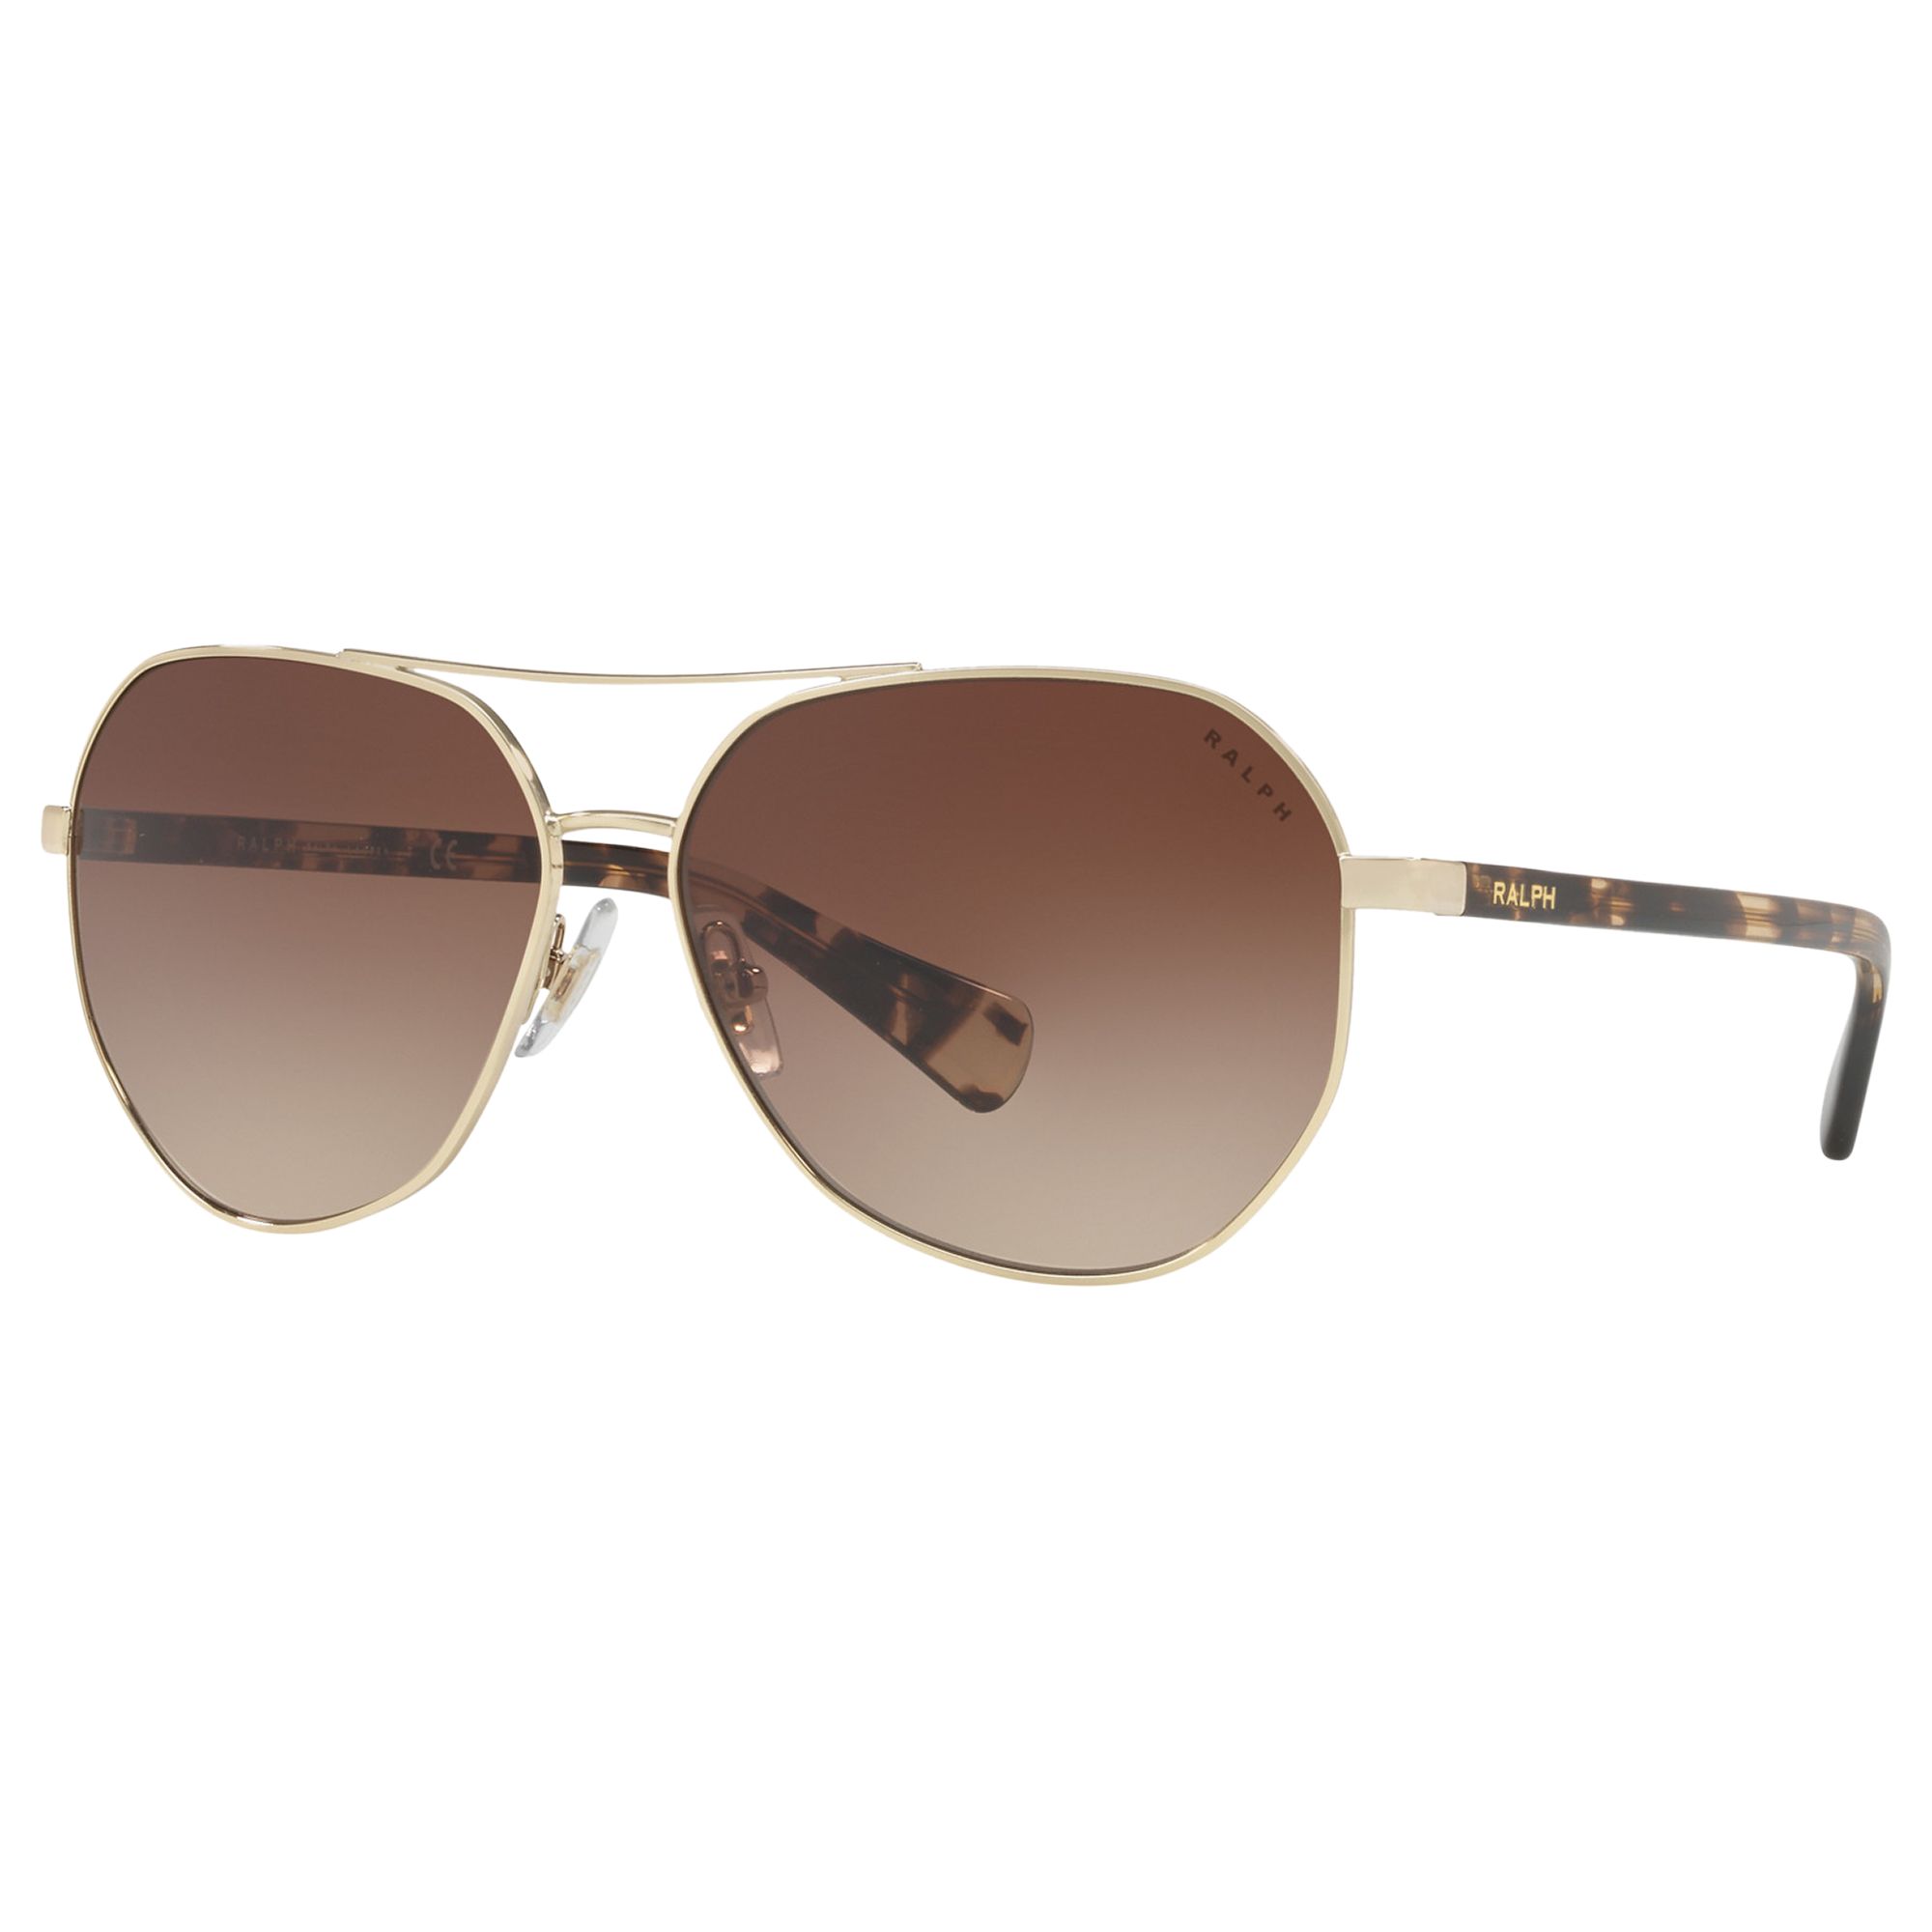 Ralph RA4123 Women's Aviator Sunglasses, Gold/Brown Gradient